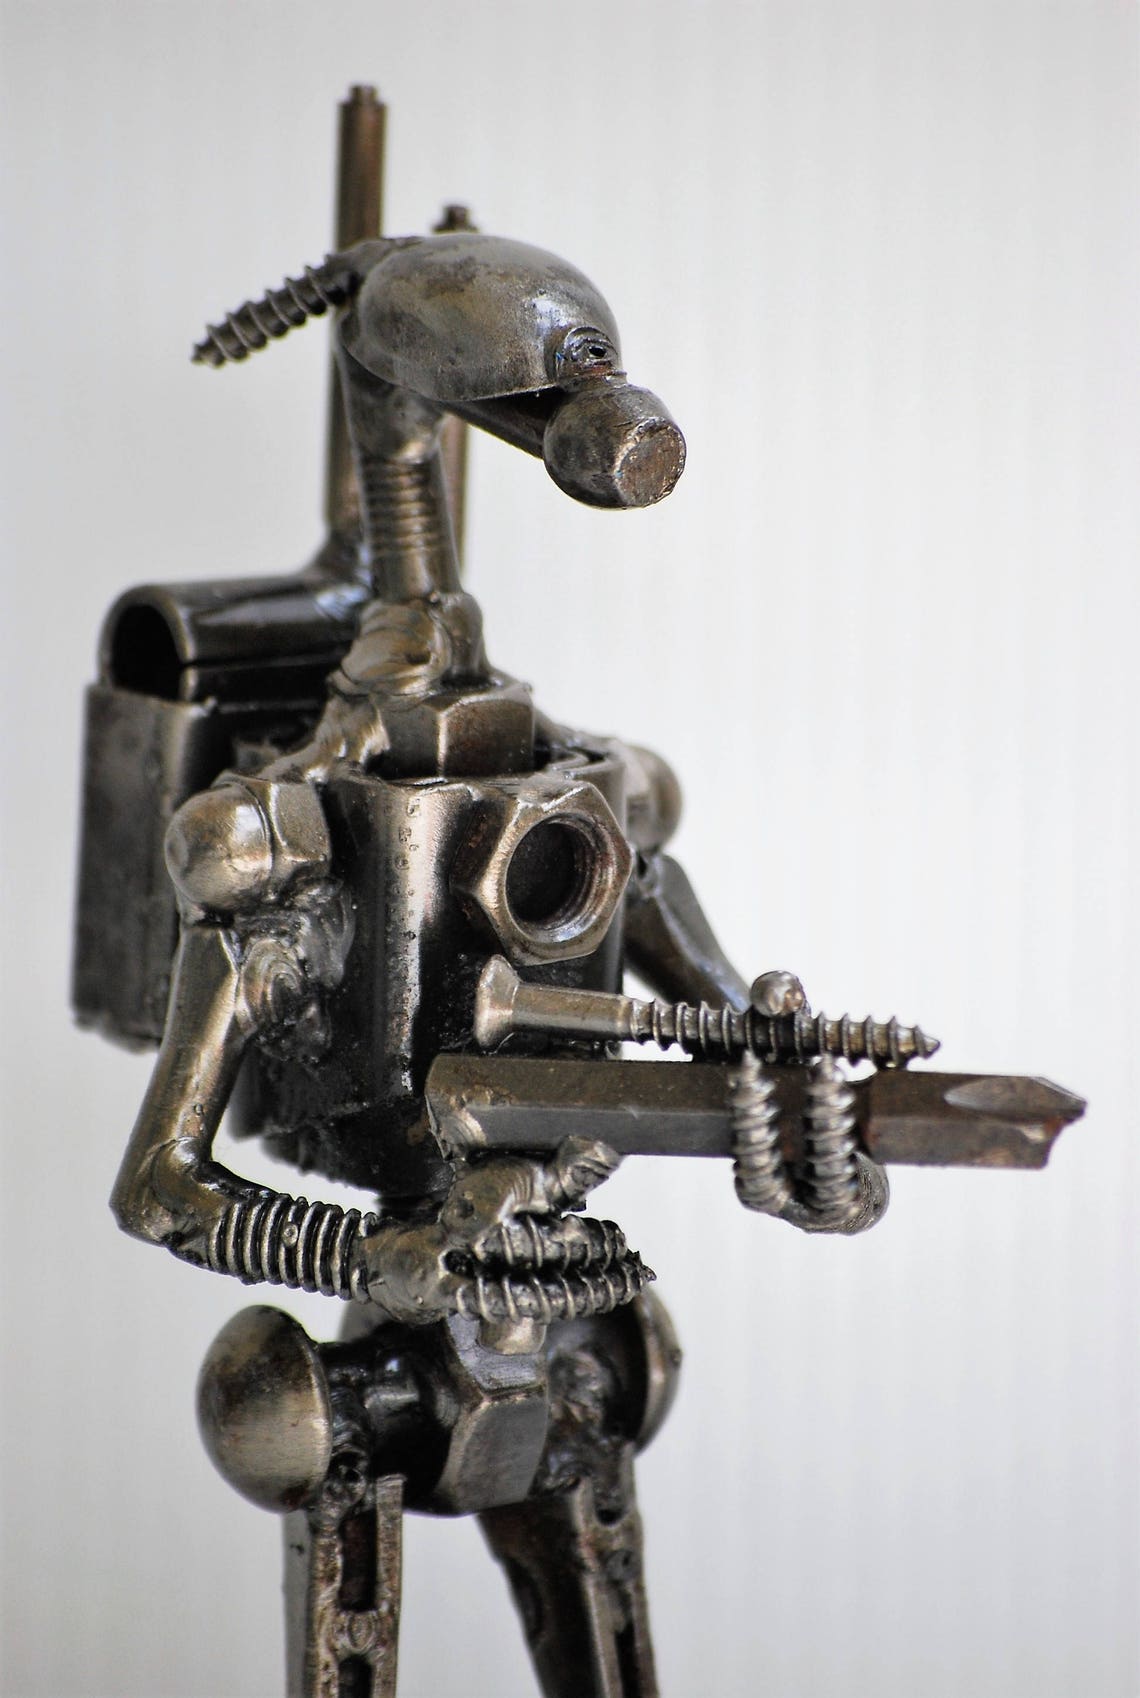 Droid Soldier small-action B Scrap Metal Sculpture Model | Etsy